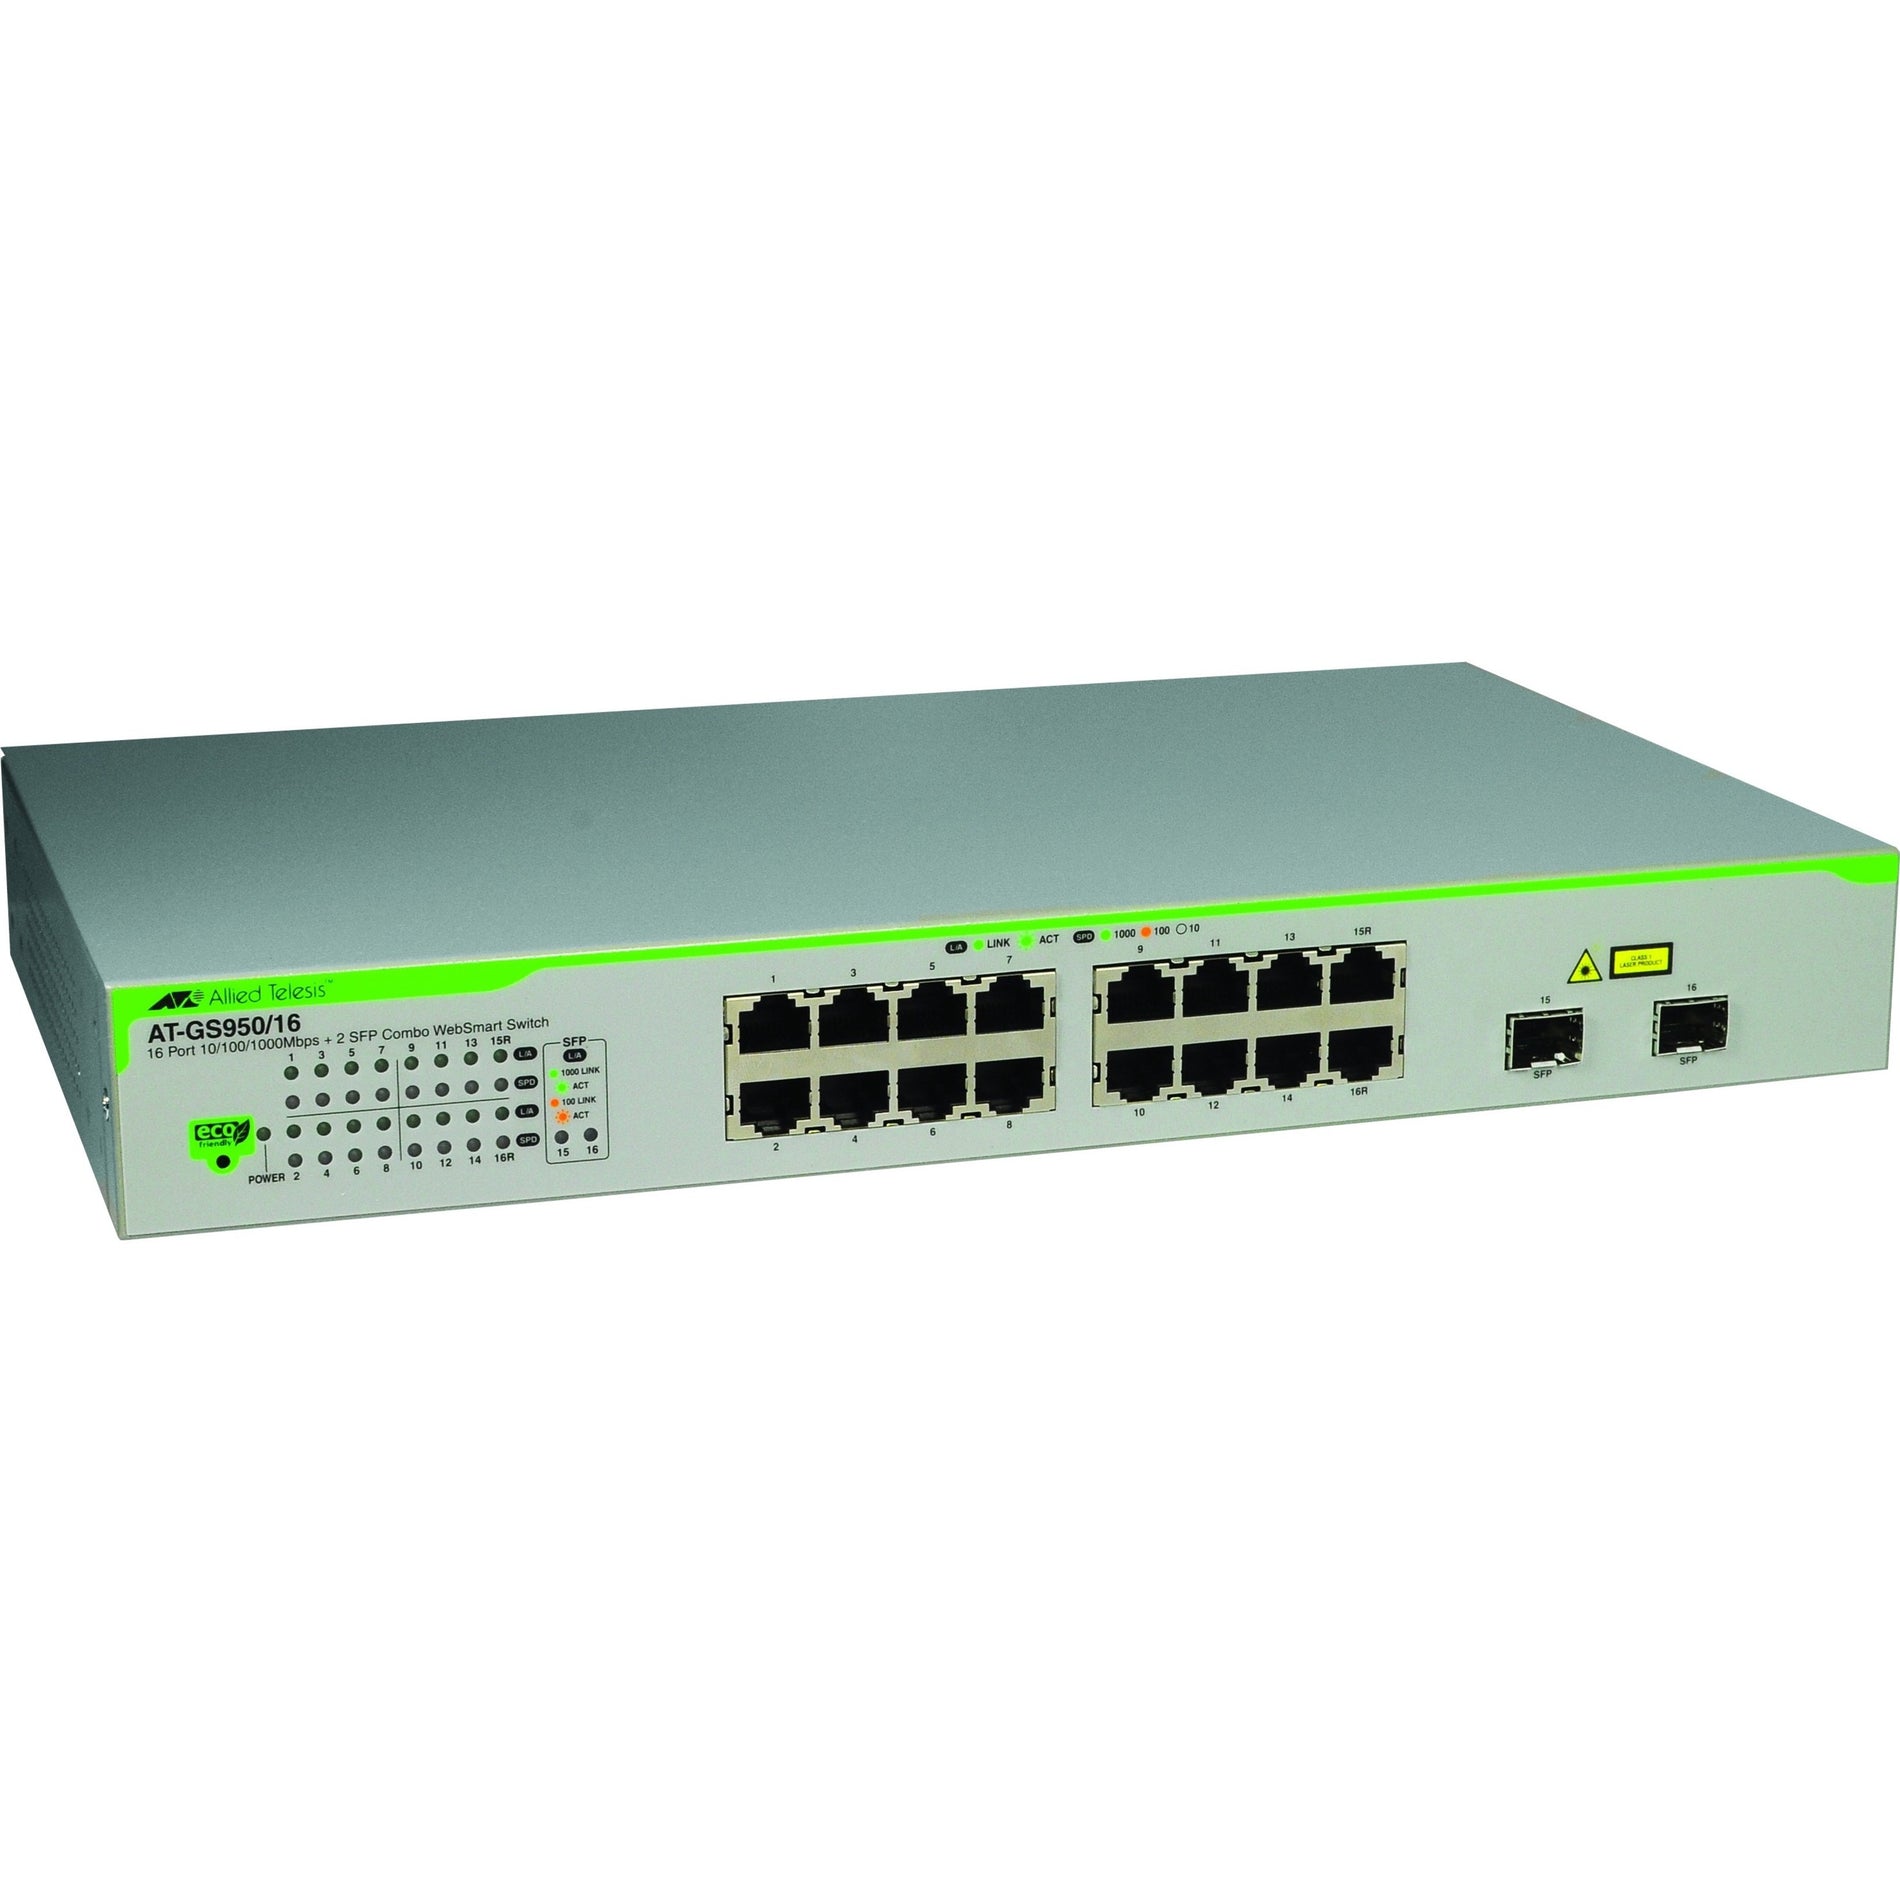 Allied Telesis AT-GS950/16-10 16 Port Gigabit WebSmart Switch, Lifetime Warranty, Non-Blocking Architecture, Link Aggregation